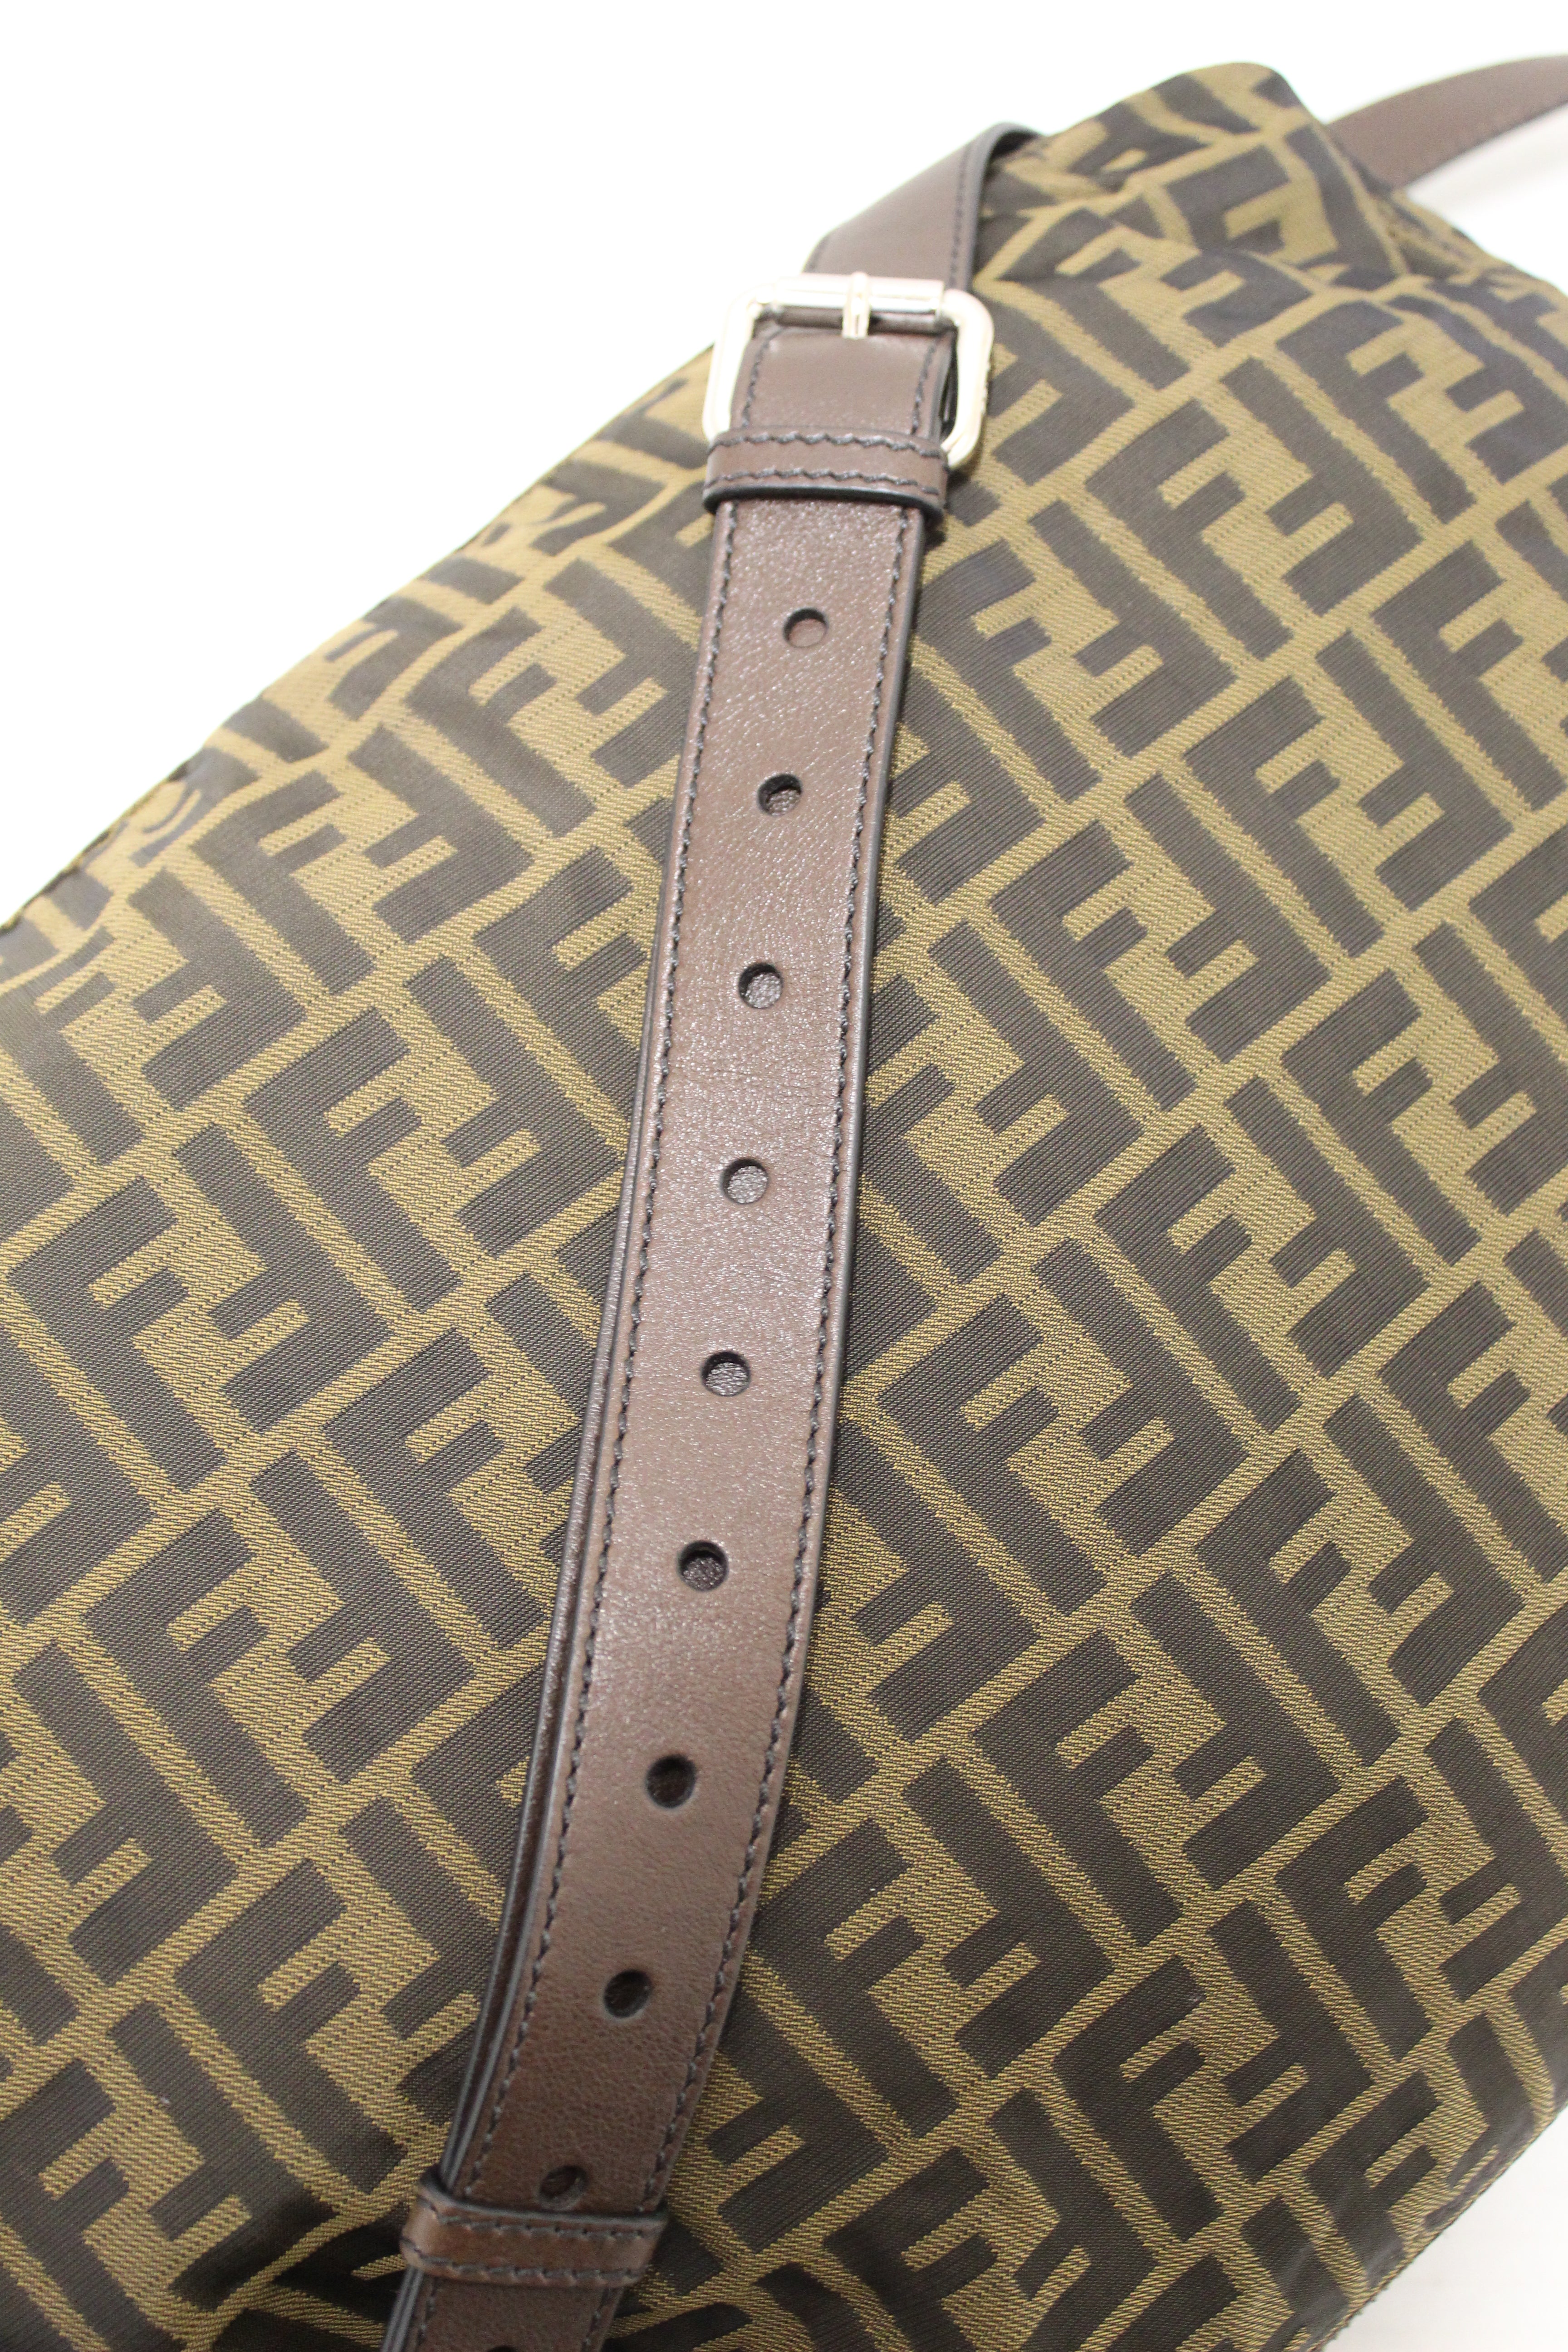 Authentic FENDI Zucchino Canvas Leather Shoulder B